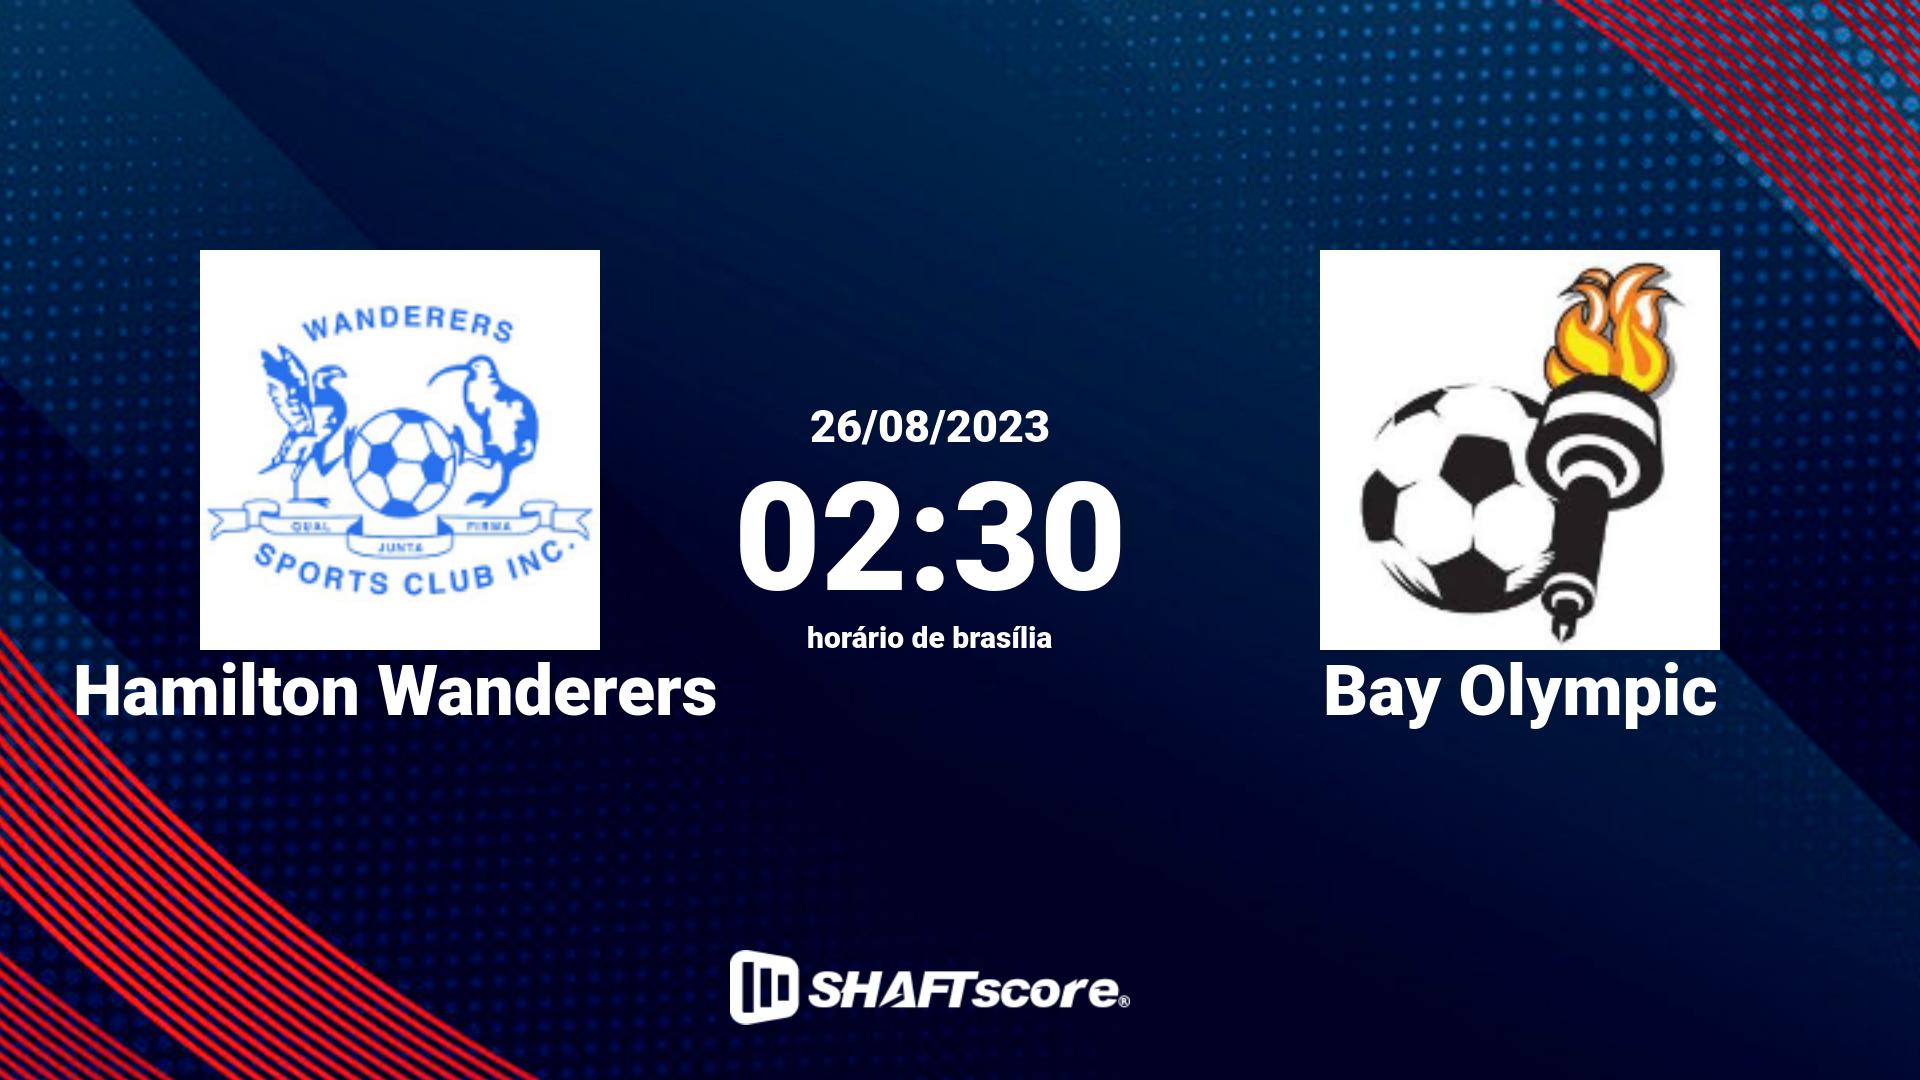 Estatísticas do jogo Hamilton Wanderers vs Bay Olympic 26.08 02:30